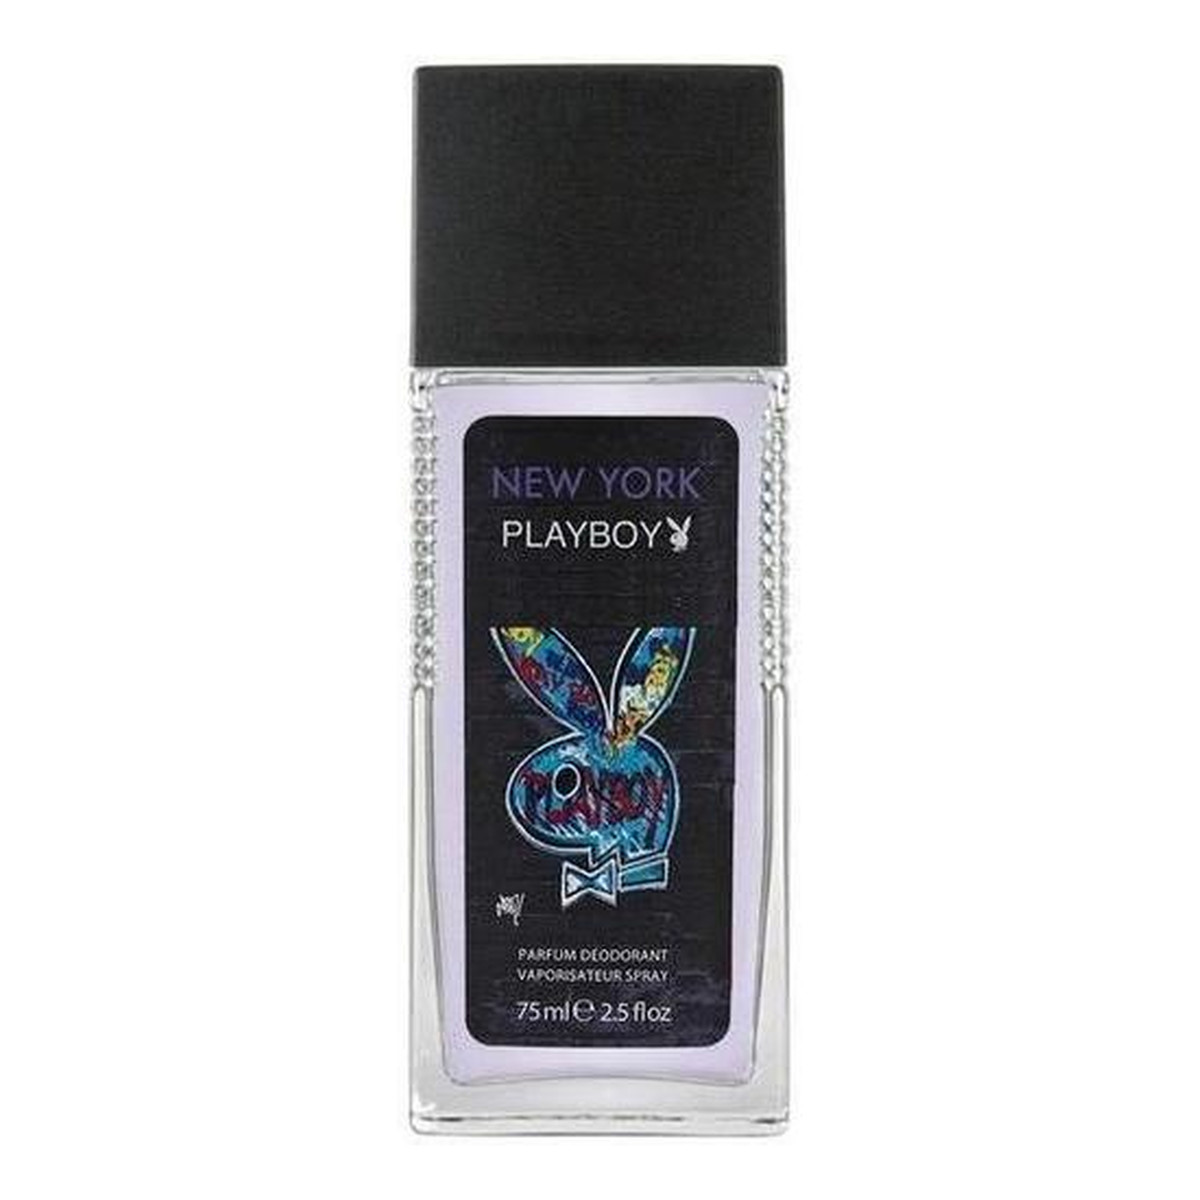 Playboy New York Dezodorant Spray 75ml